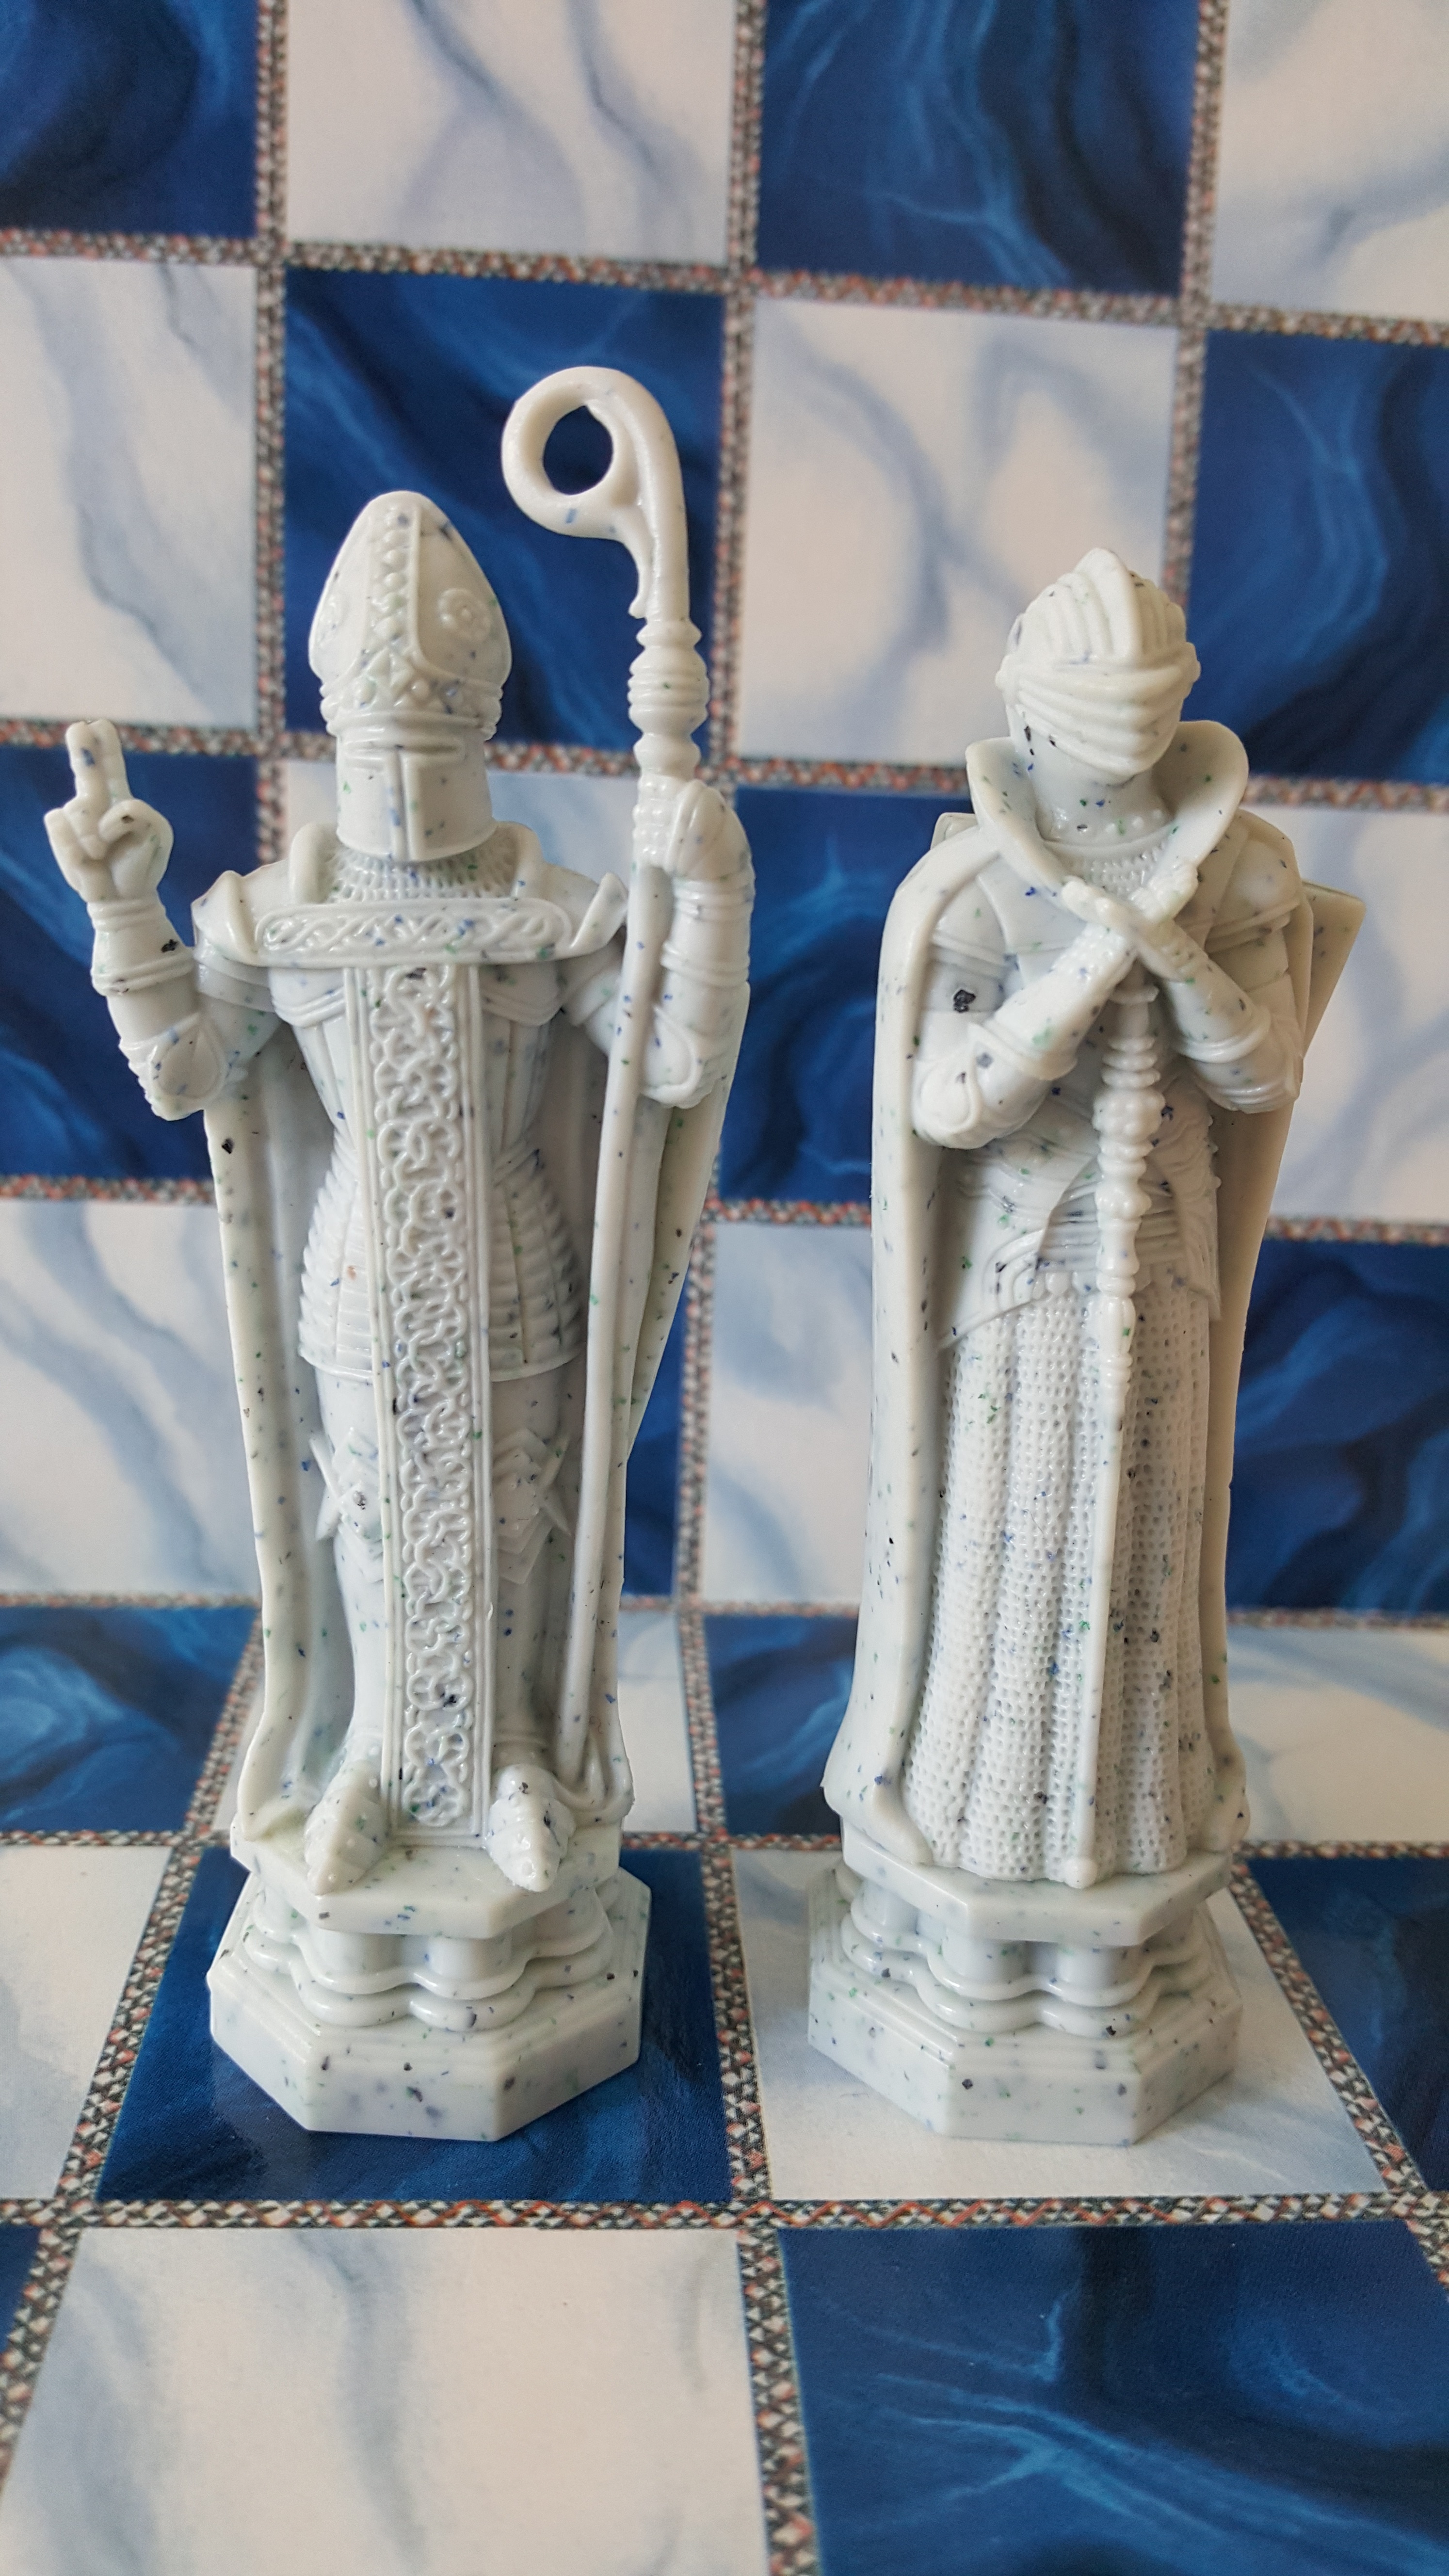 2 white and blue ceramic priest figurine